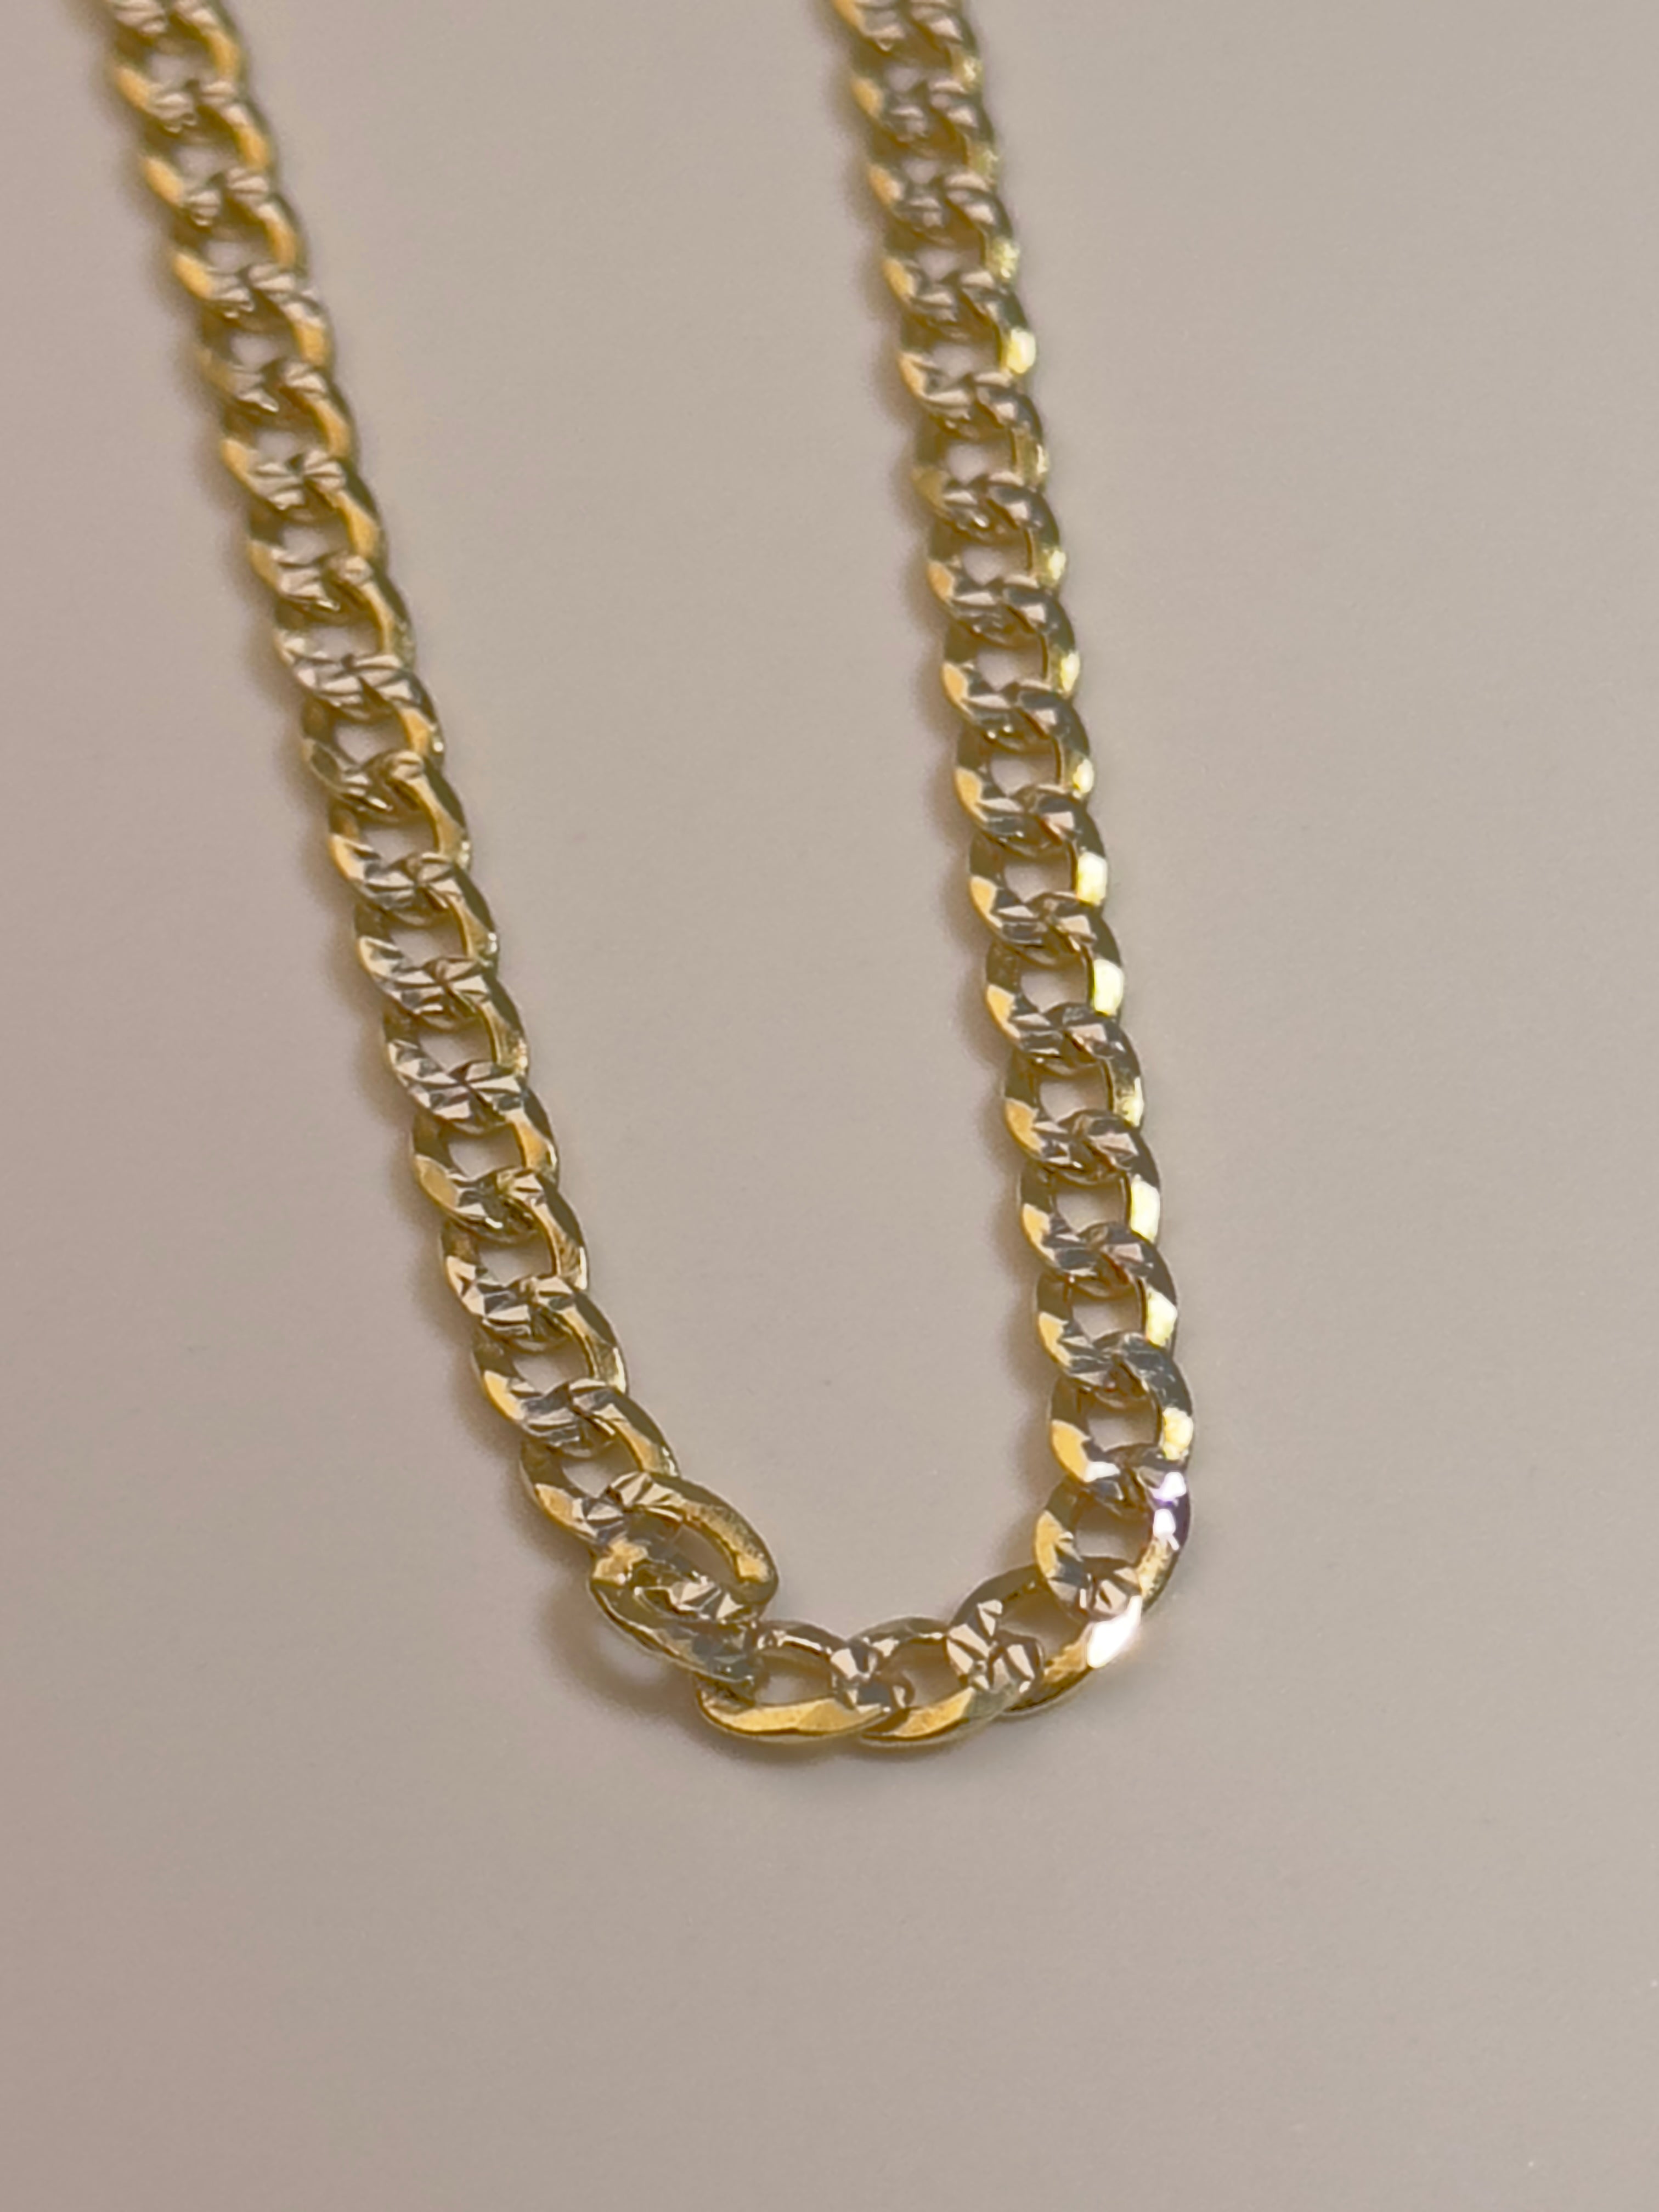 DR3108 - 925 Sterling Silver,14K YG Bonded - Men's Gold Chains - Cuban w/ Diamond Cut